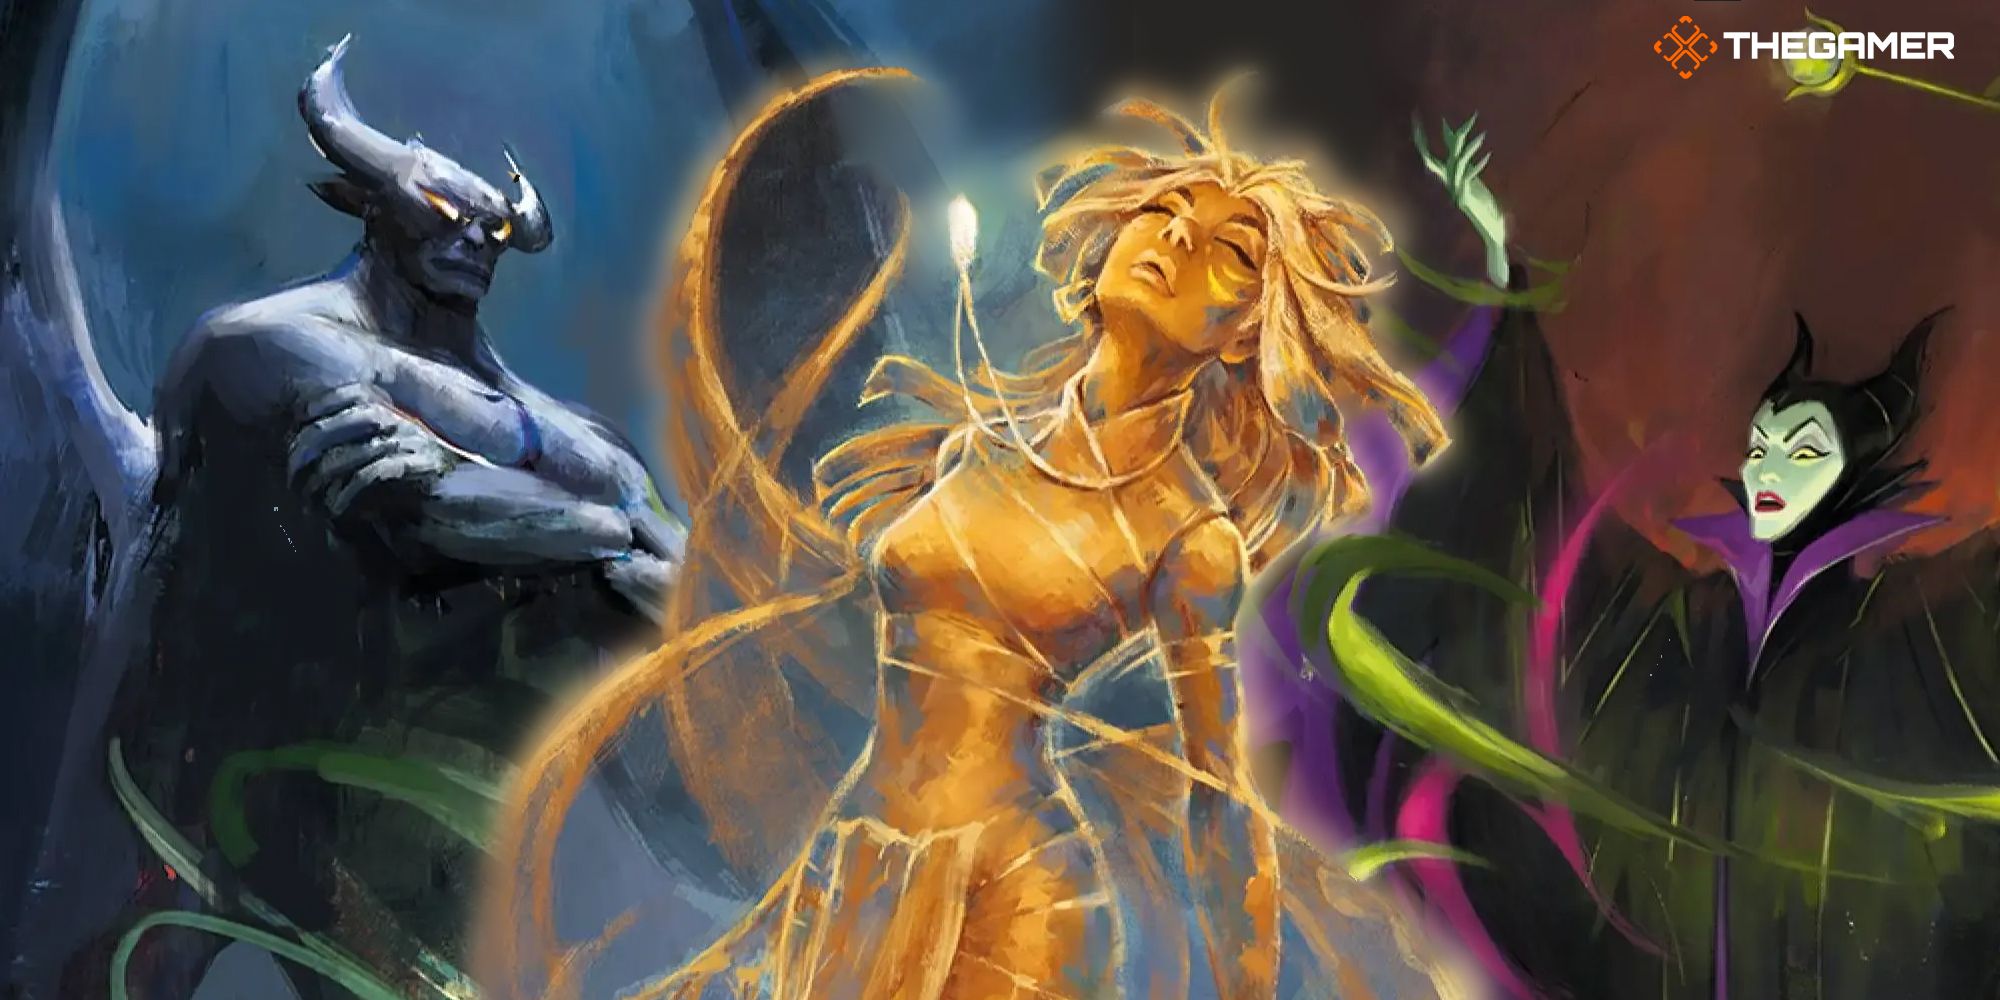 Disney Lorcana combined image of Chernabog, Kida, and Maleficent